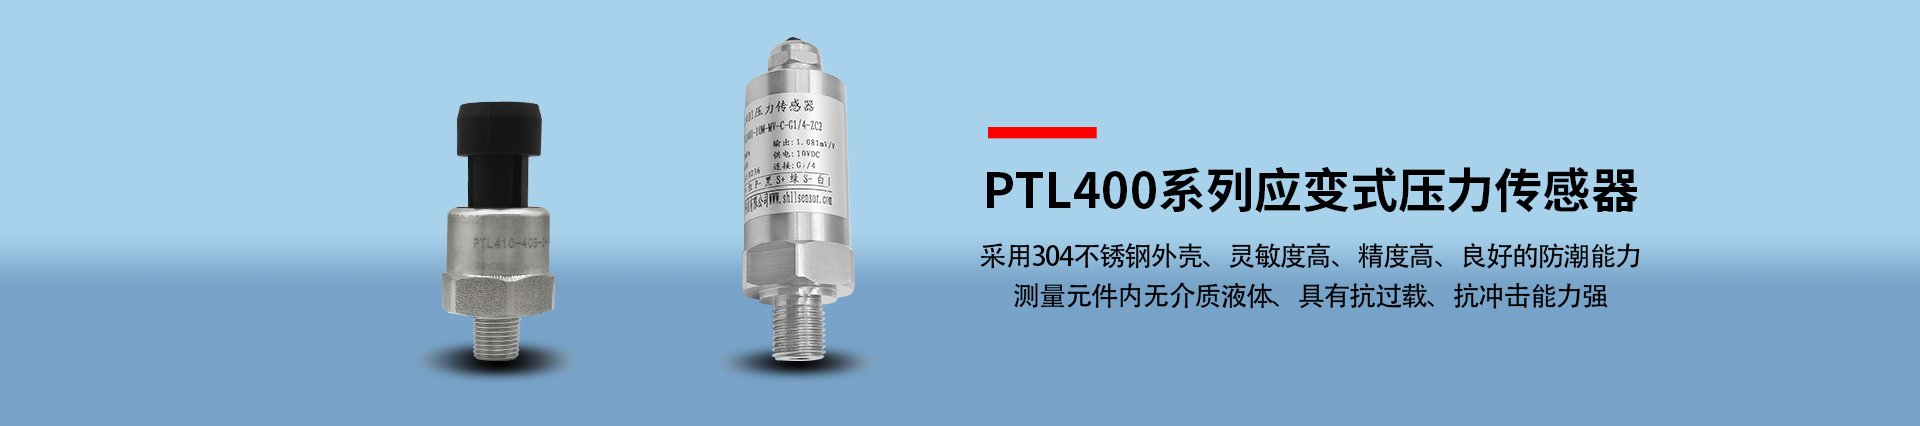 PTL400系列应变式压力传感器